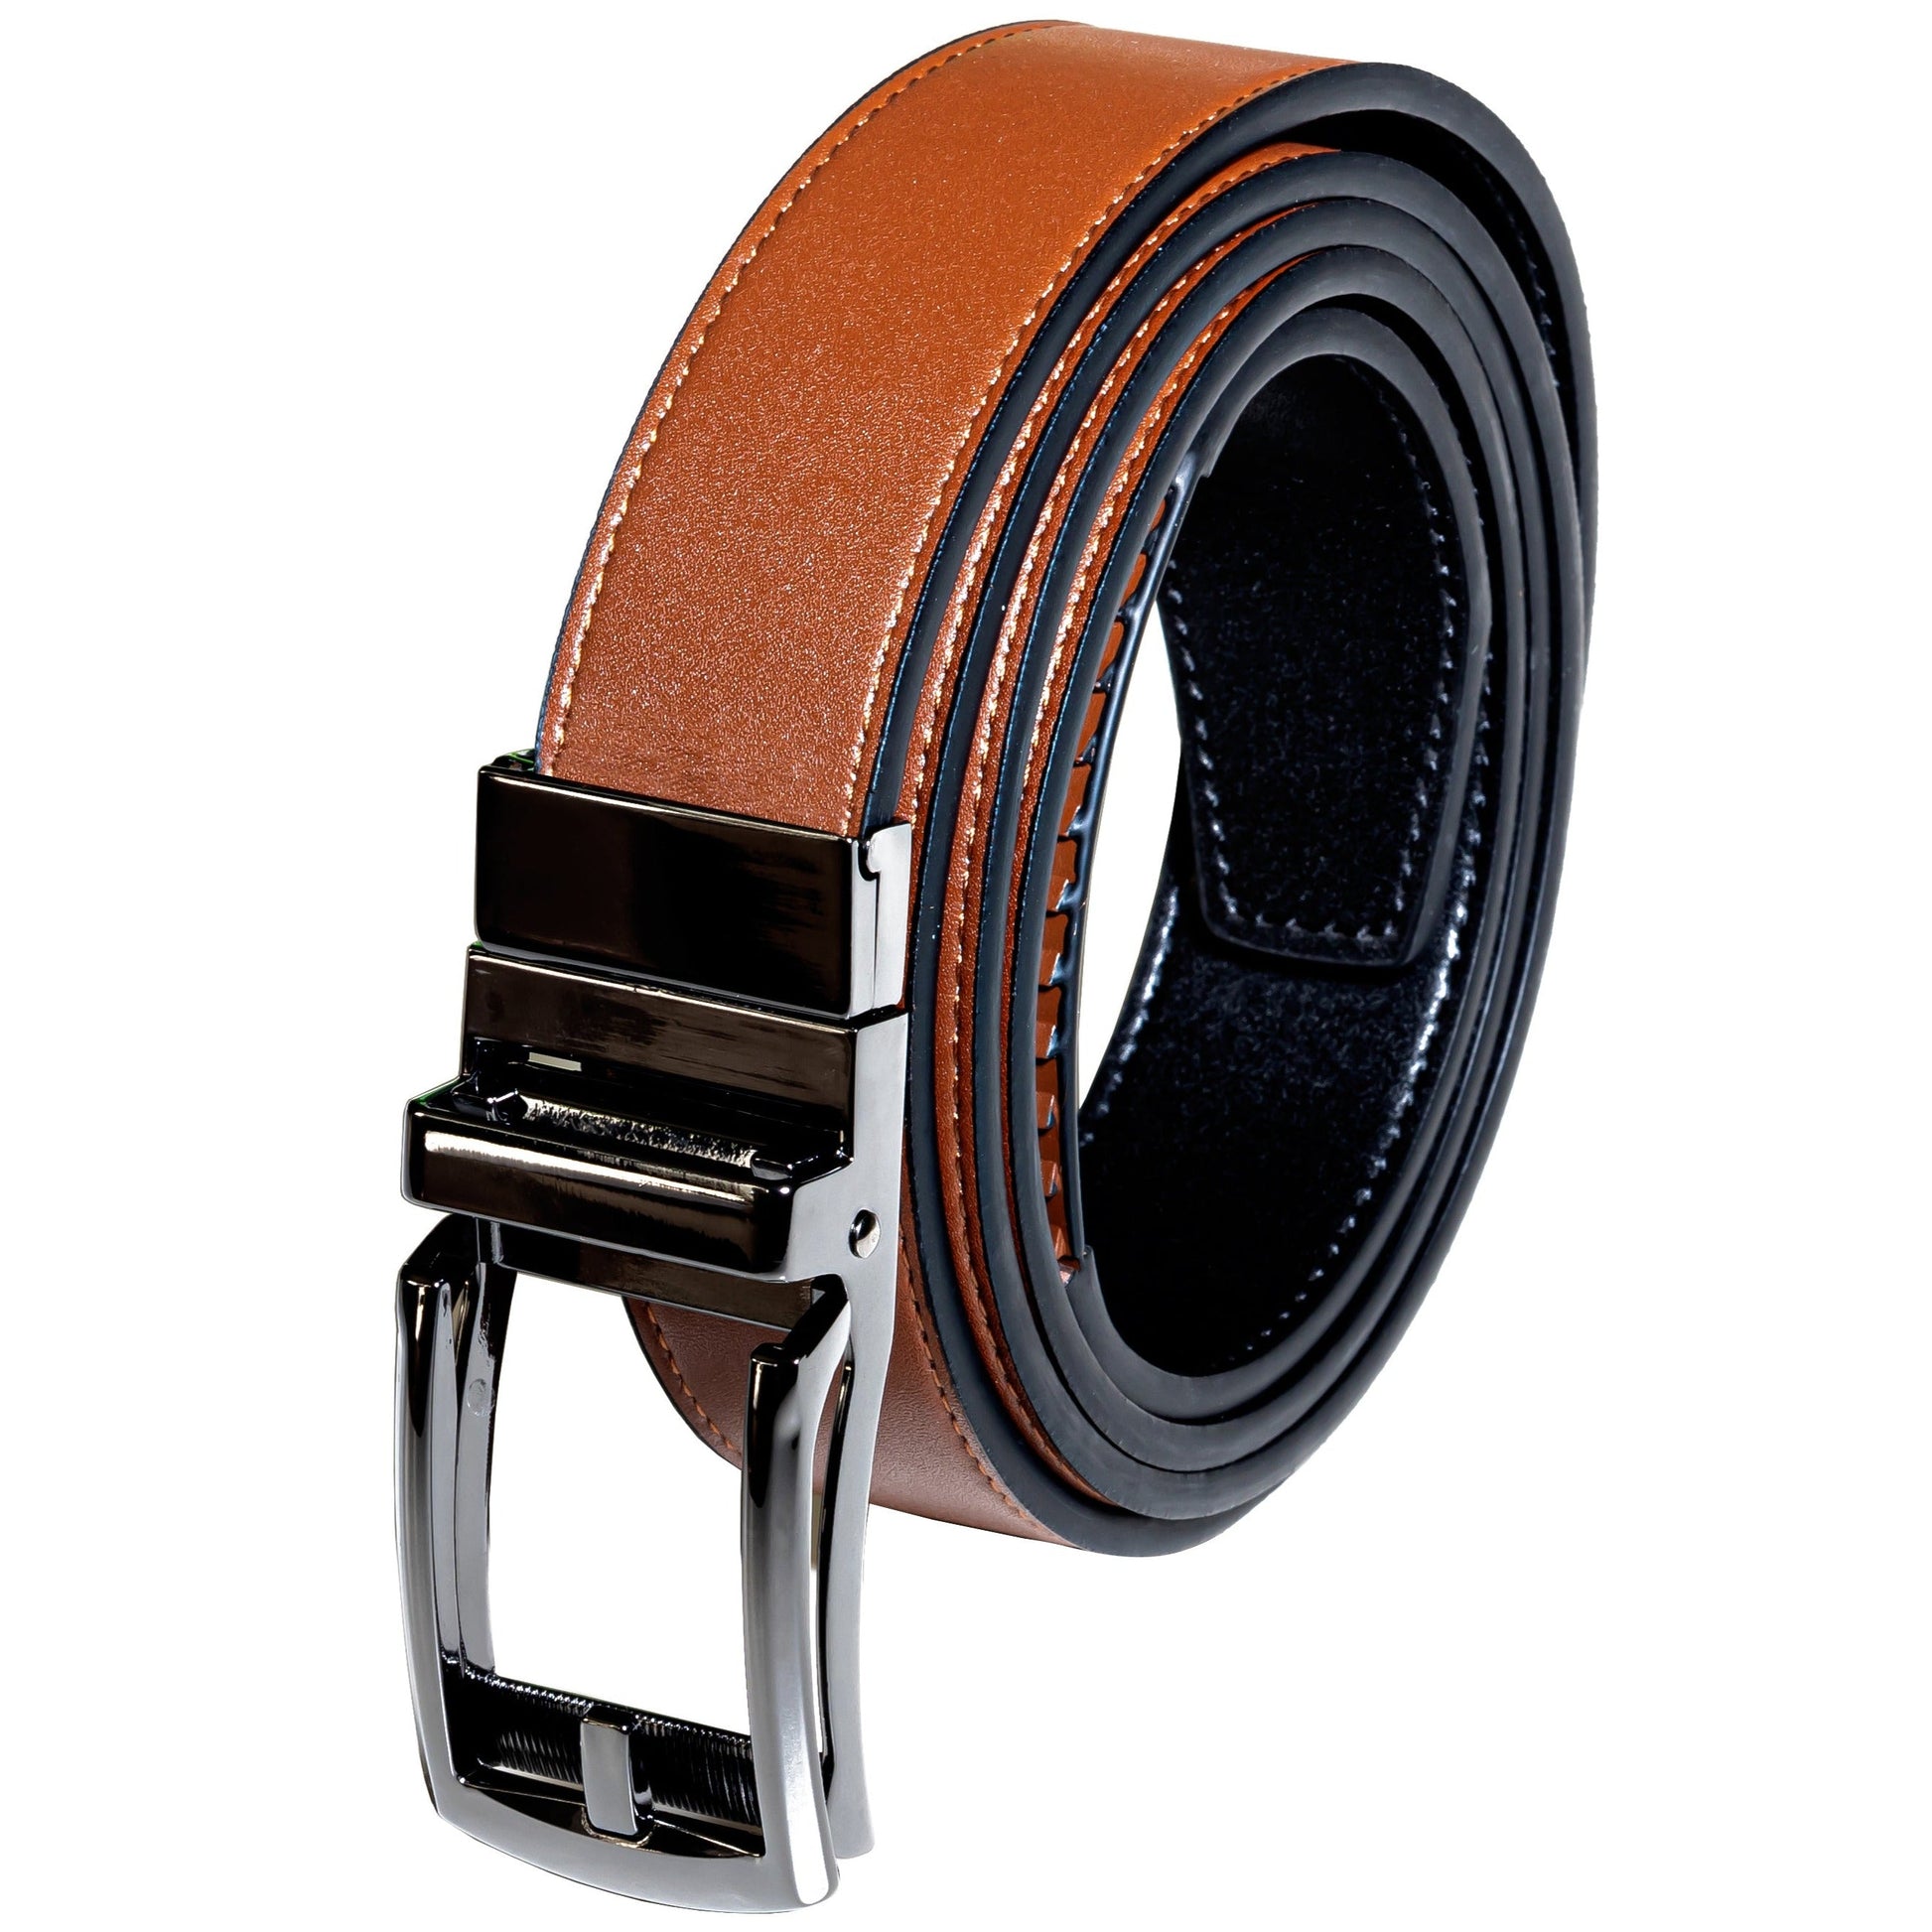 Patented Reversible Ratchet Belt